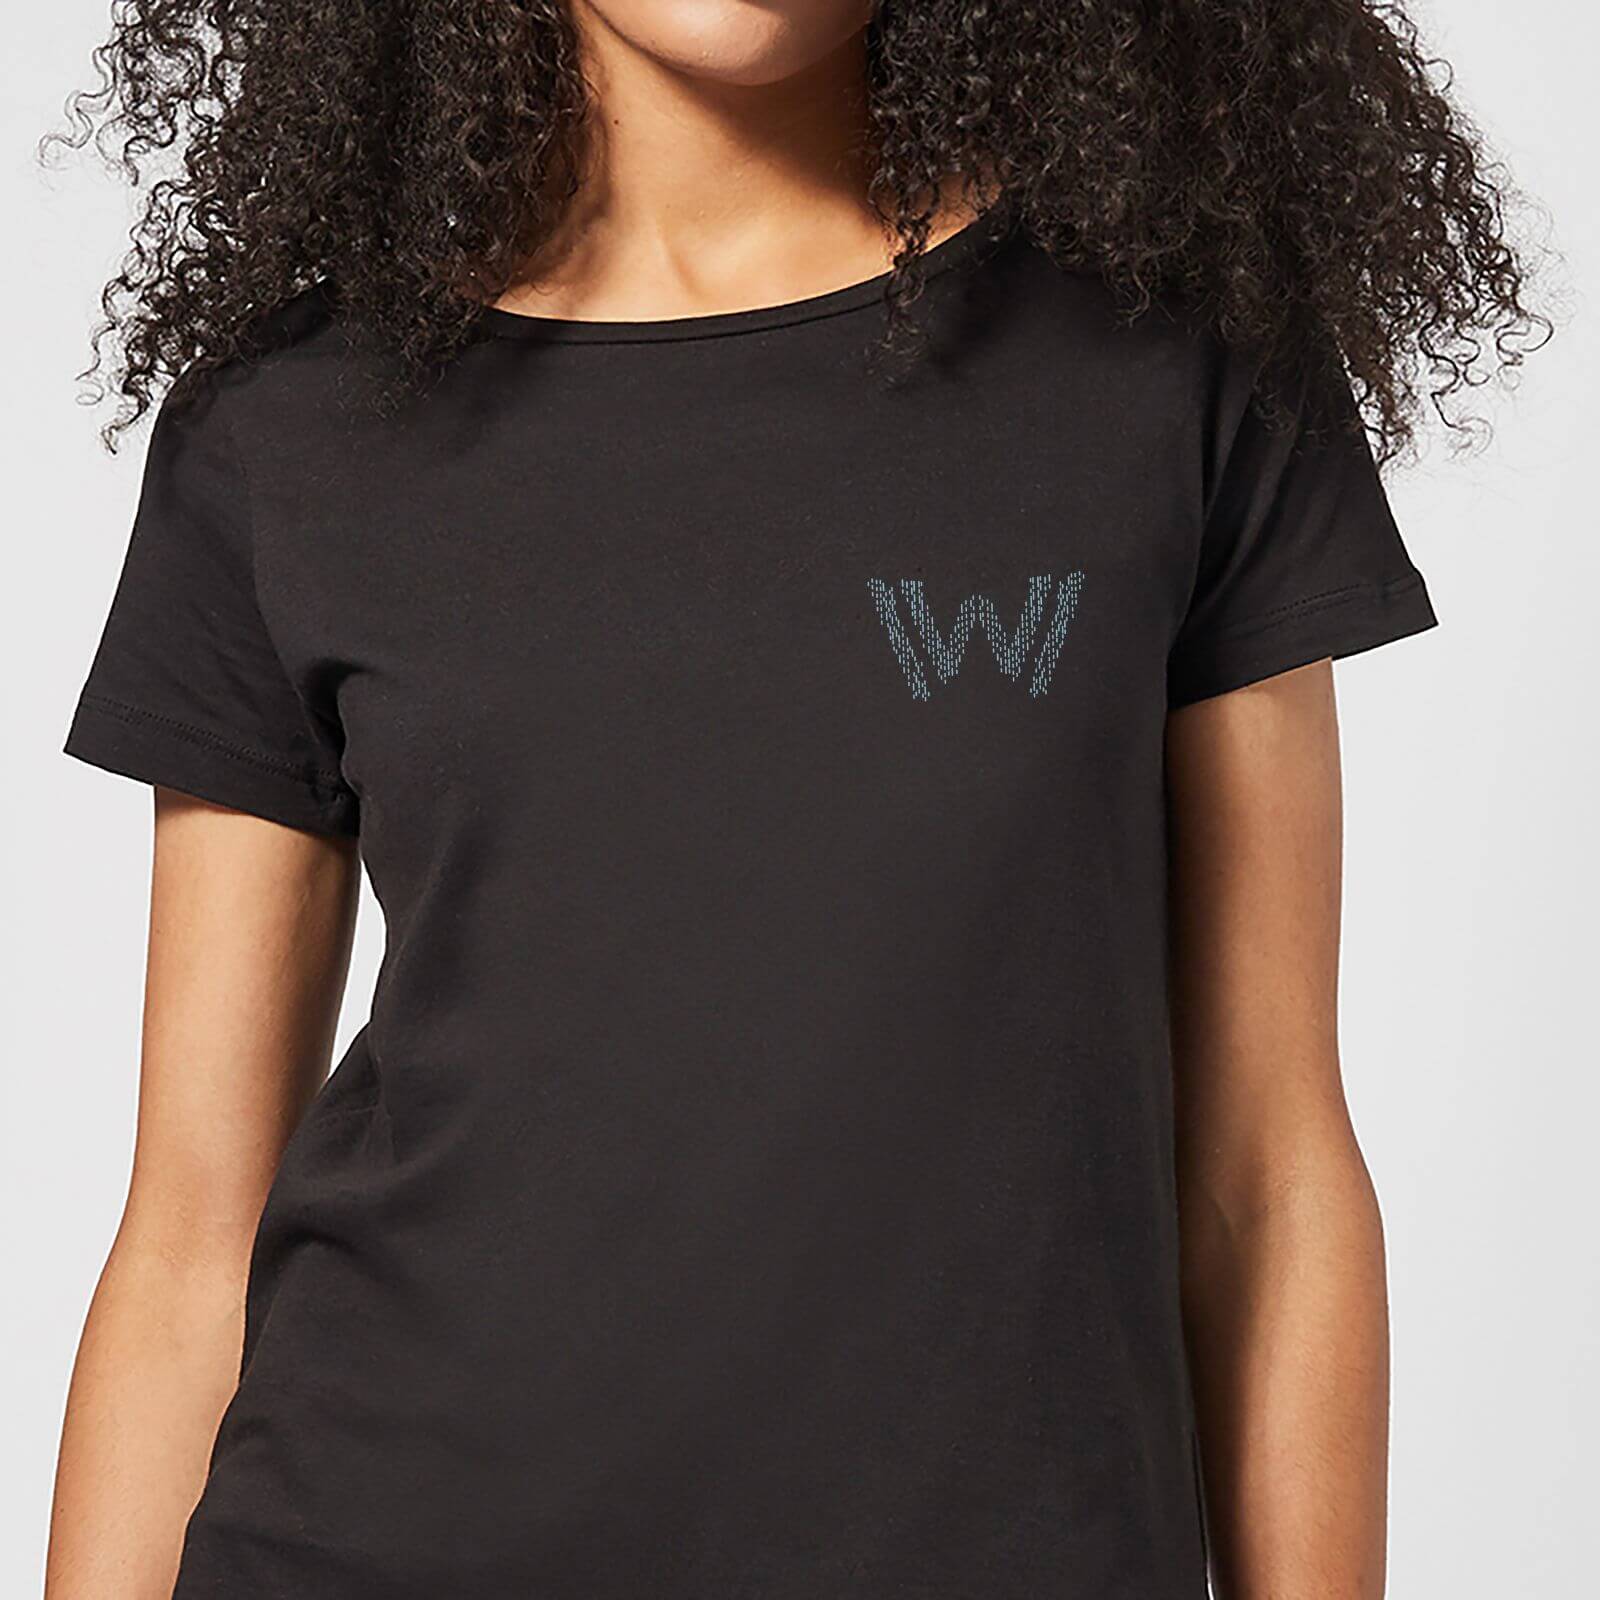 westworld logo women's t-shirt - black - xl - nero